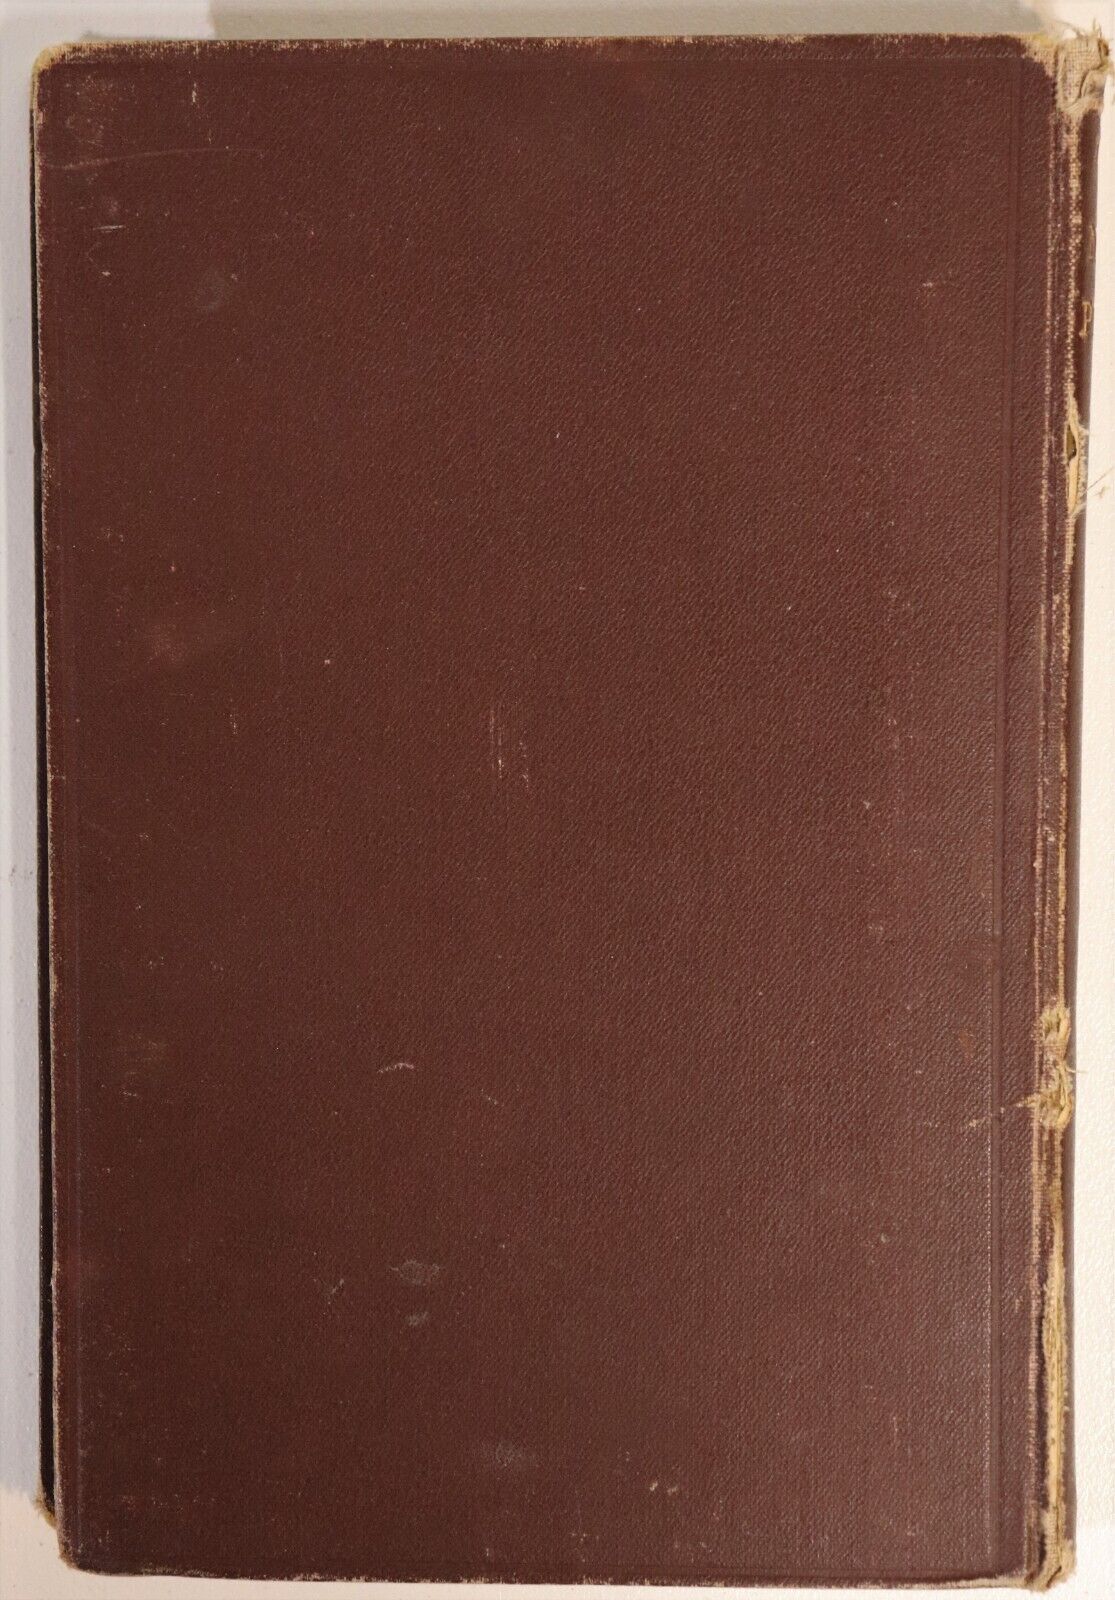 Munera Pulveris by John Ruskin - 1886 - Antique Political History Book